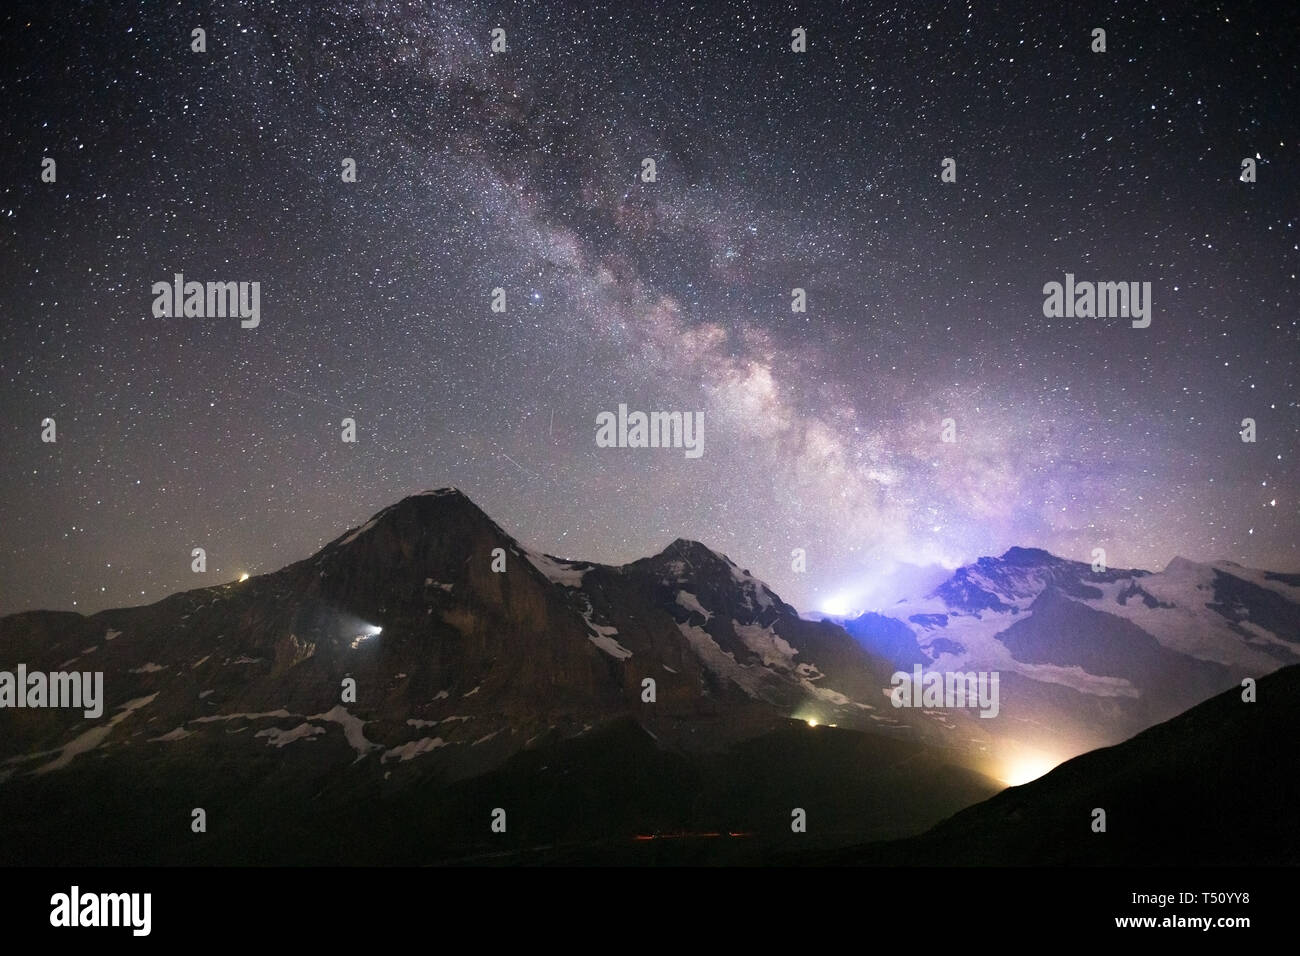 Milky Way, starry sky, night landscape. Eiger, Monch, Jungfrau mountains. Bernese Alps. Swiss Alps. Europe. Stock Photo